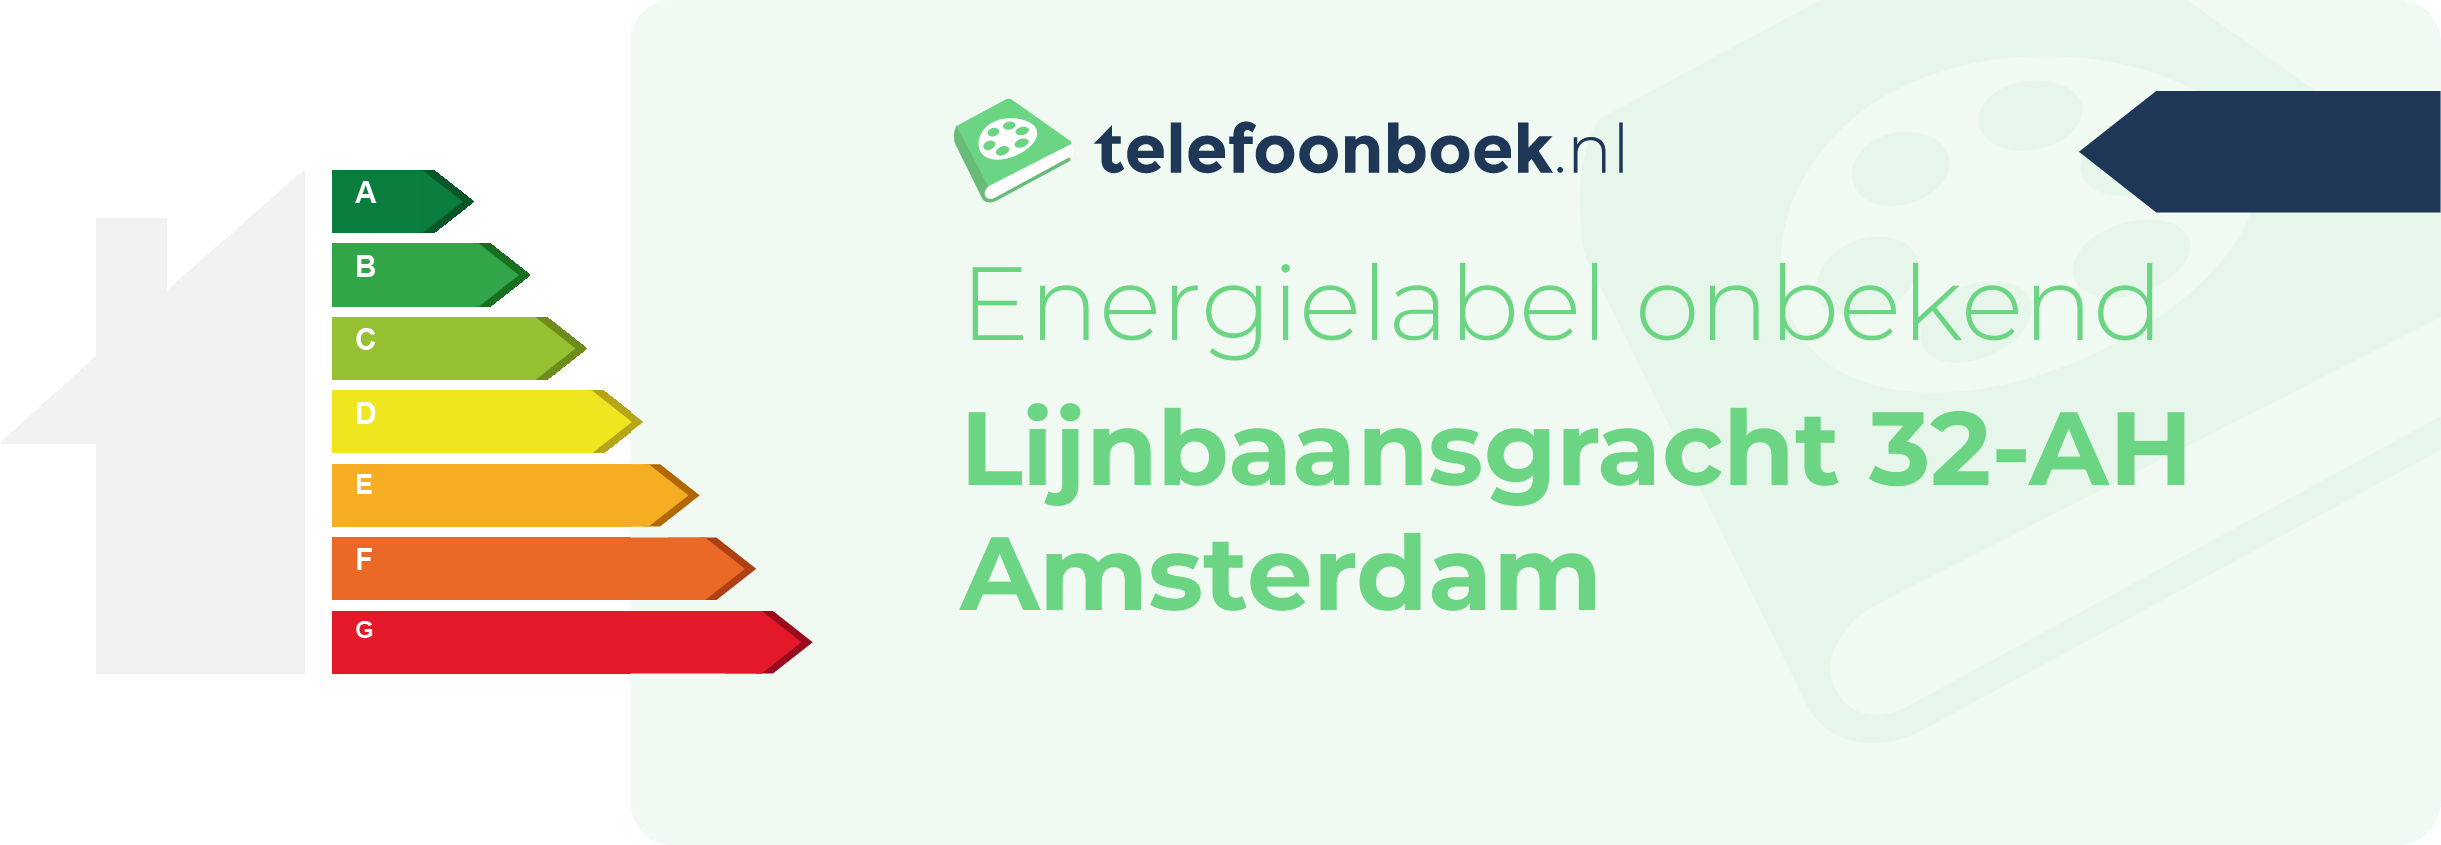 Energielabel Lijnbaansgracht 32-AH Amsterdam